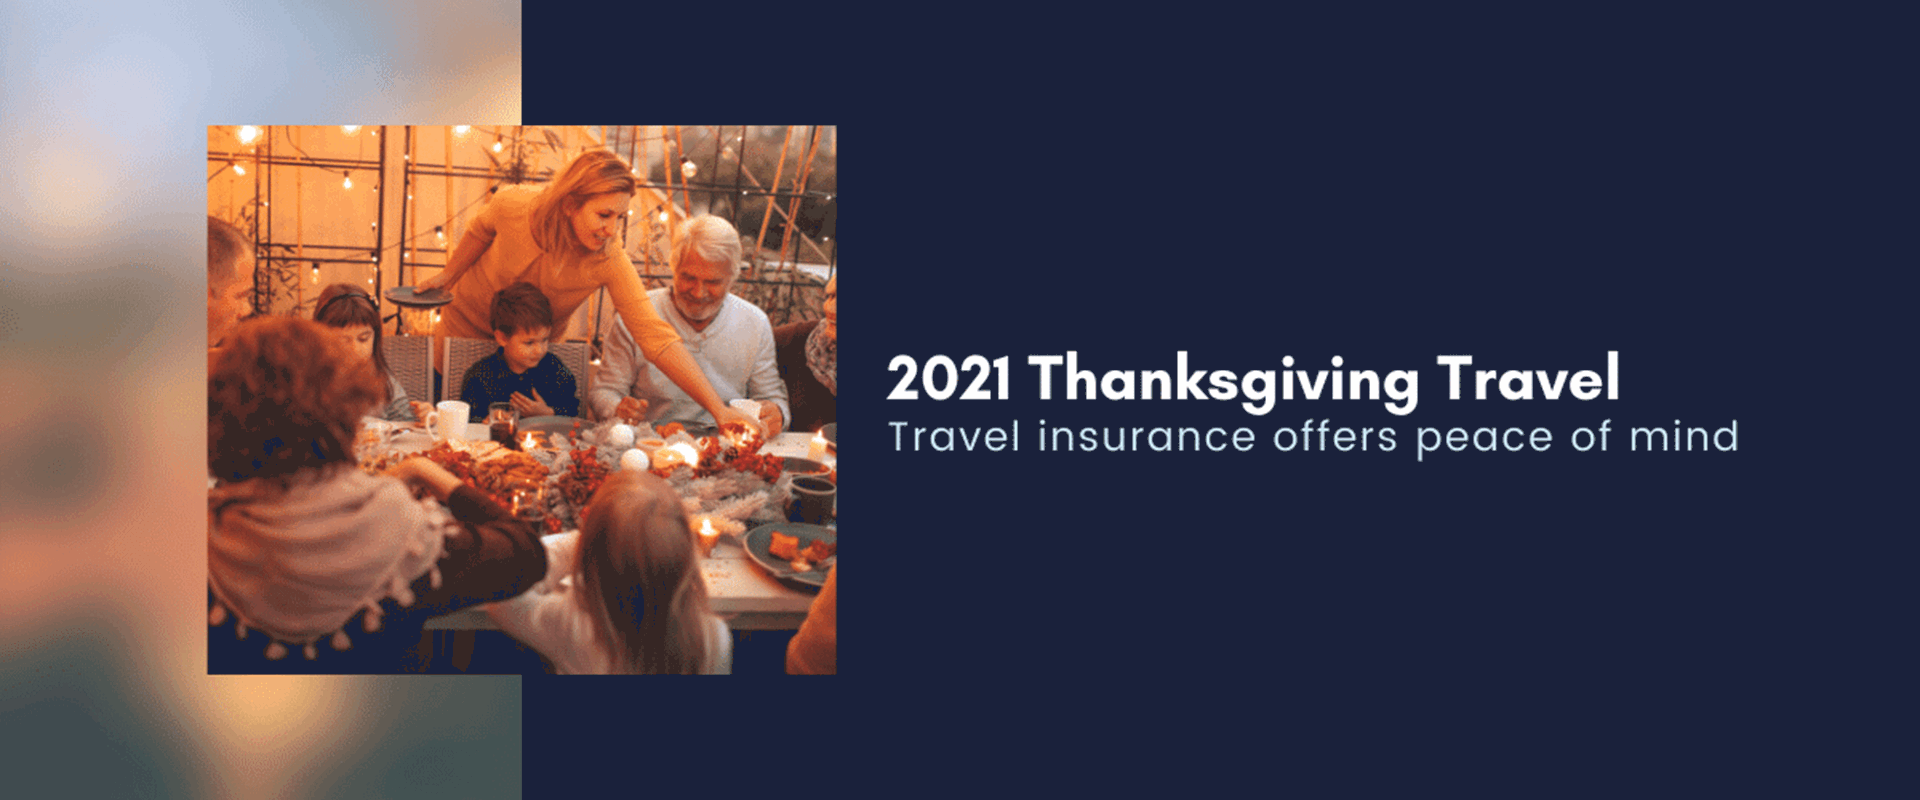 2021 Thanksgiving Travel